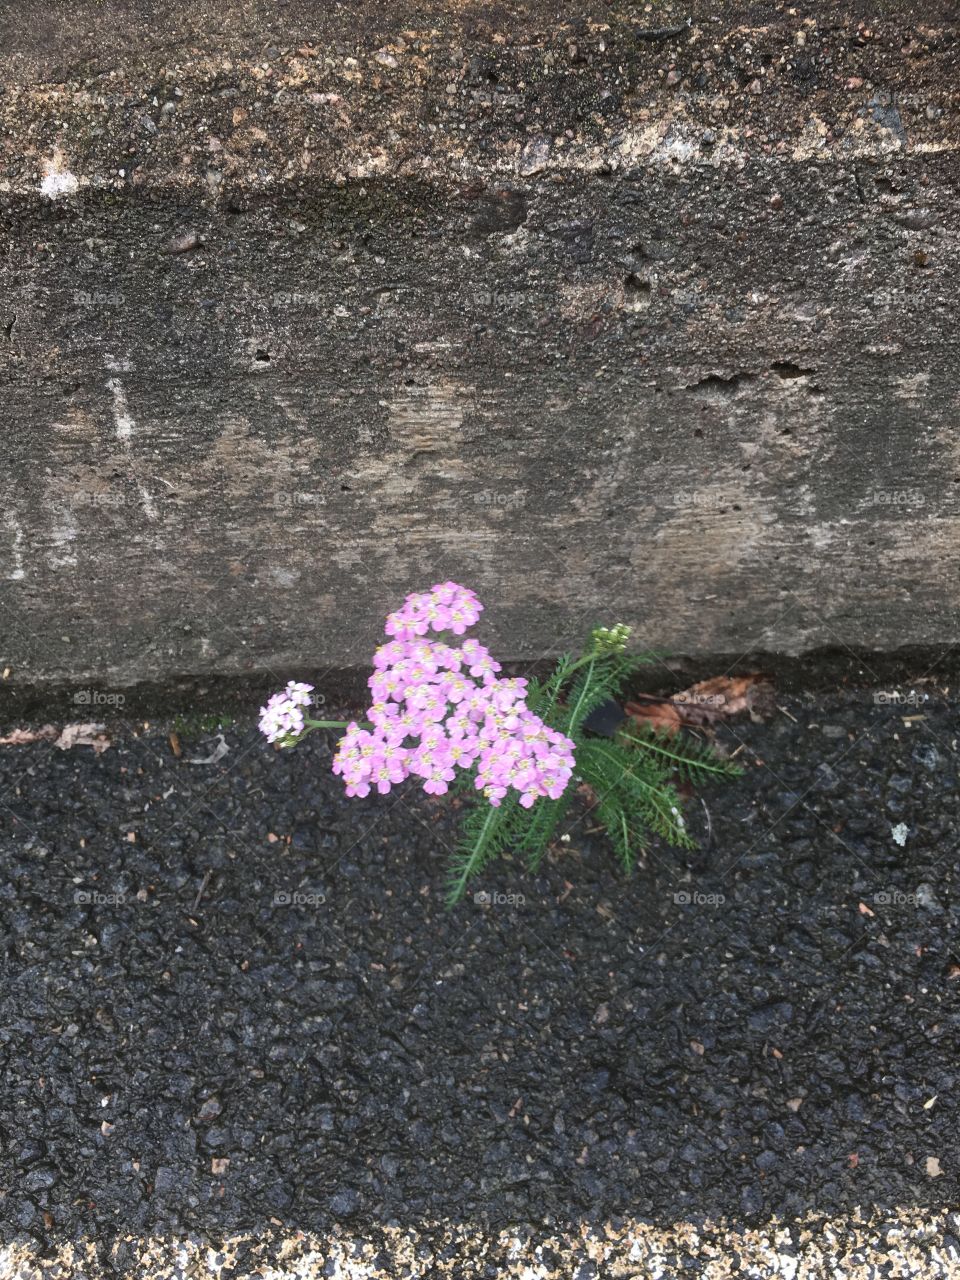 Flower growing from the asphalt. 